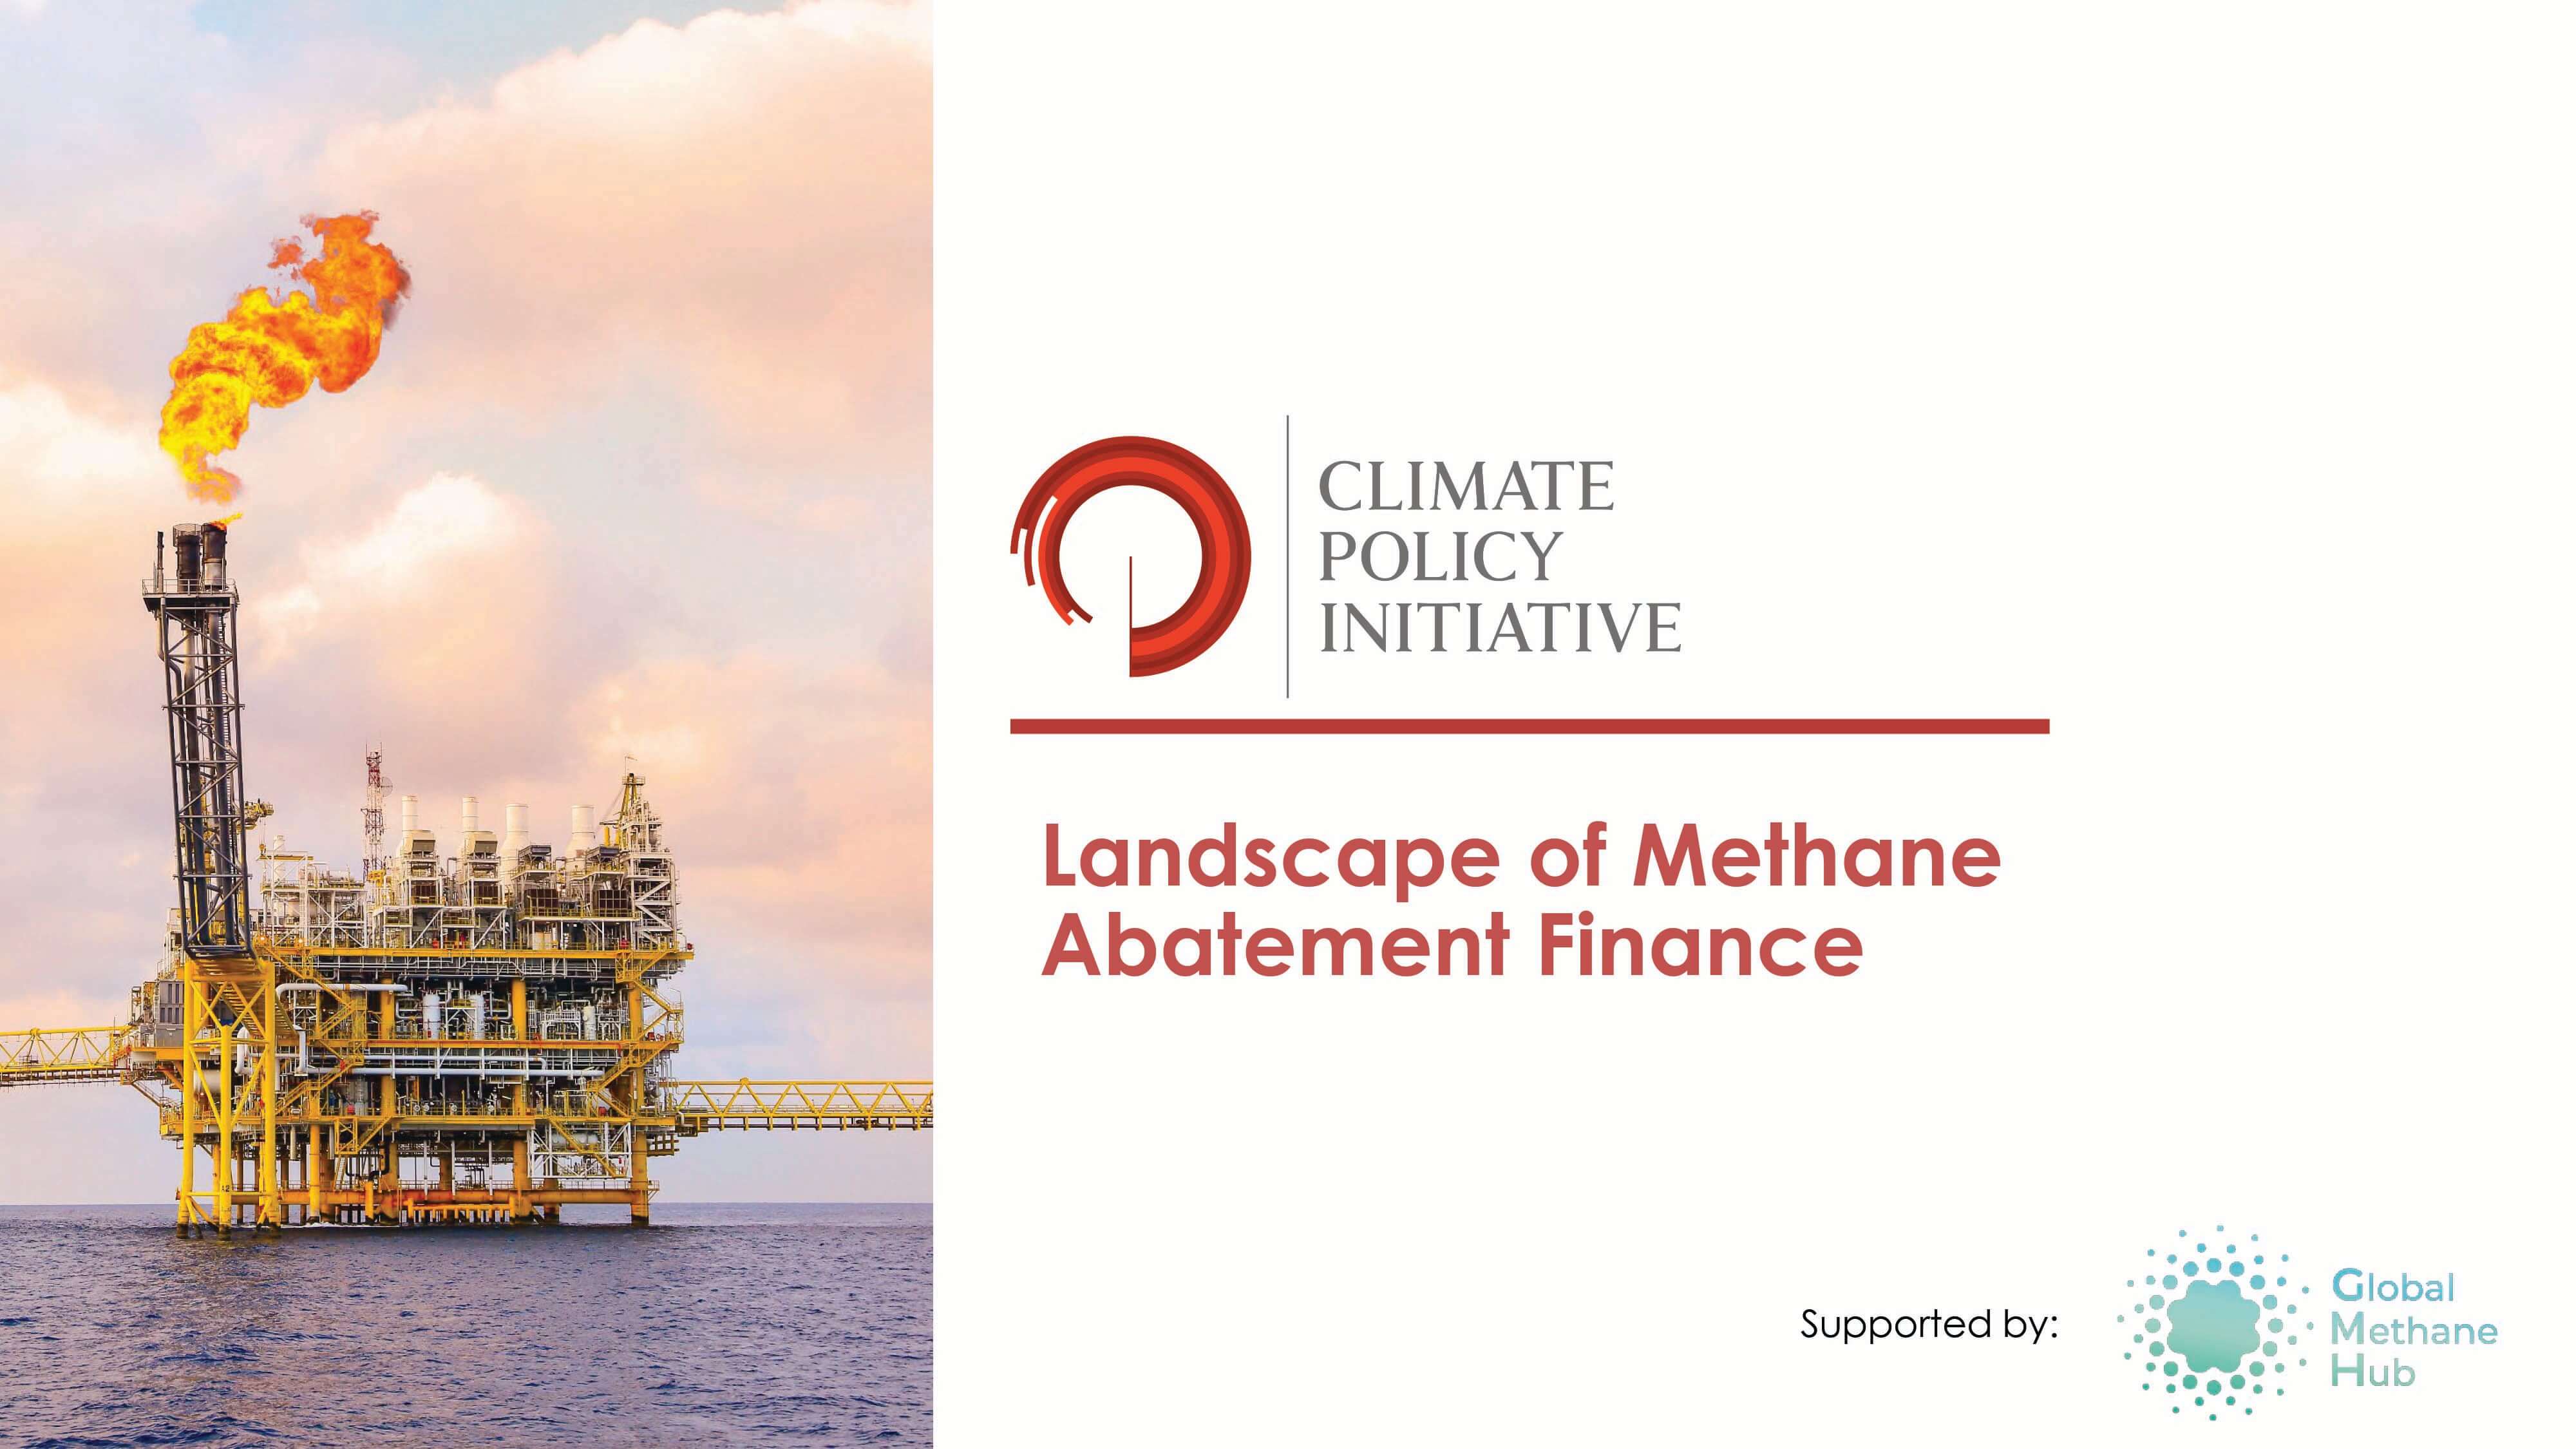 Landscape of Methane Abatement Finance
                                       